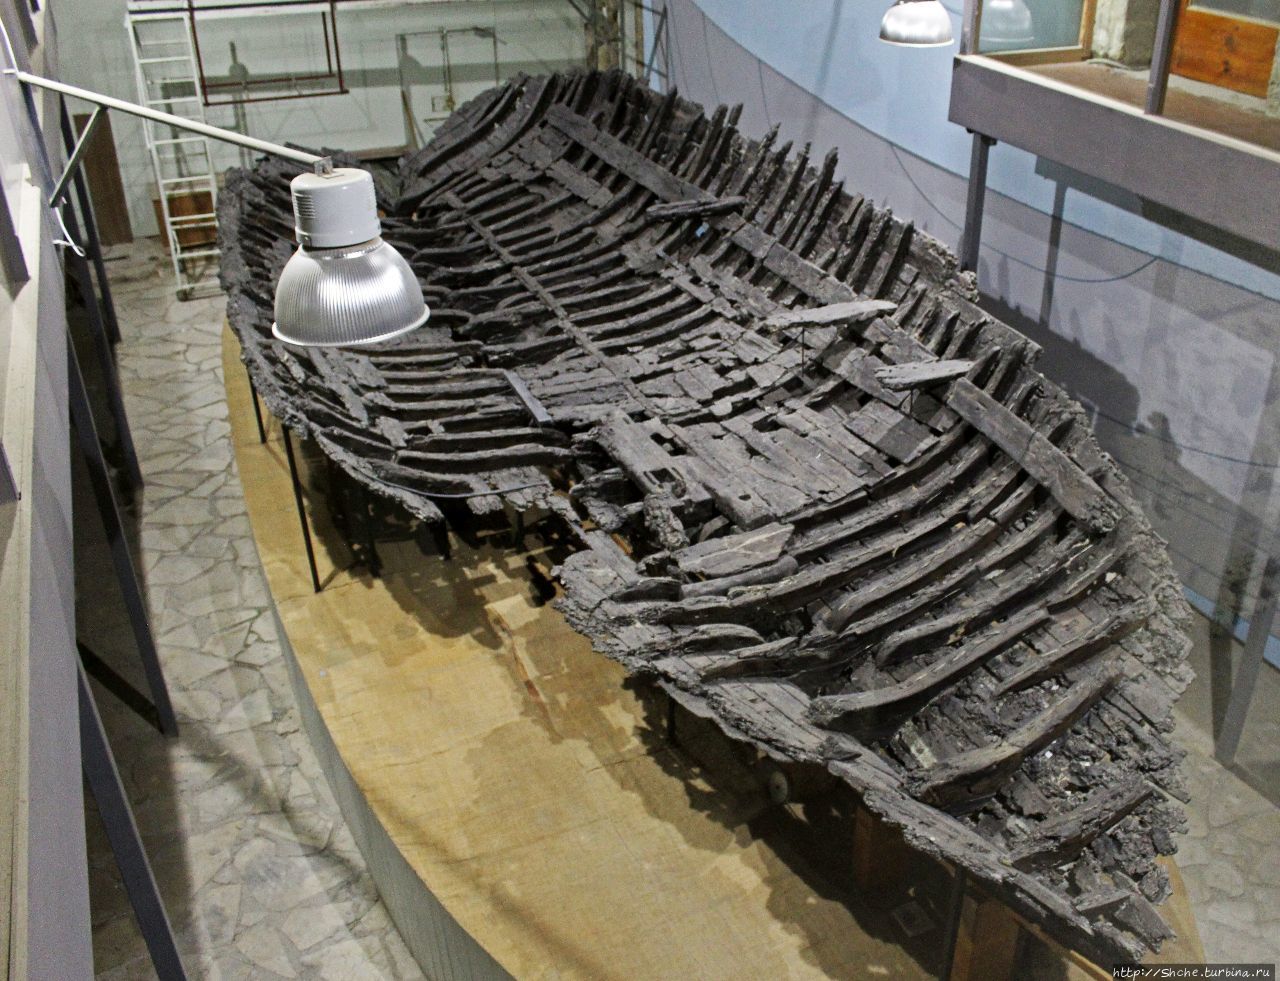 Взглянуть на почти 2500-летний корабль, не погружаясь в море